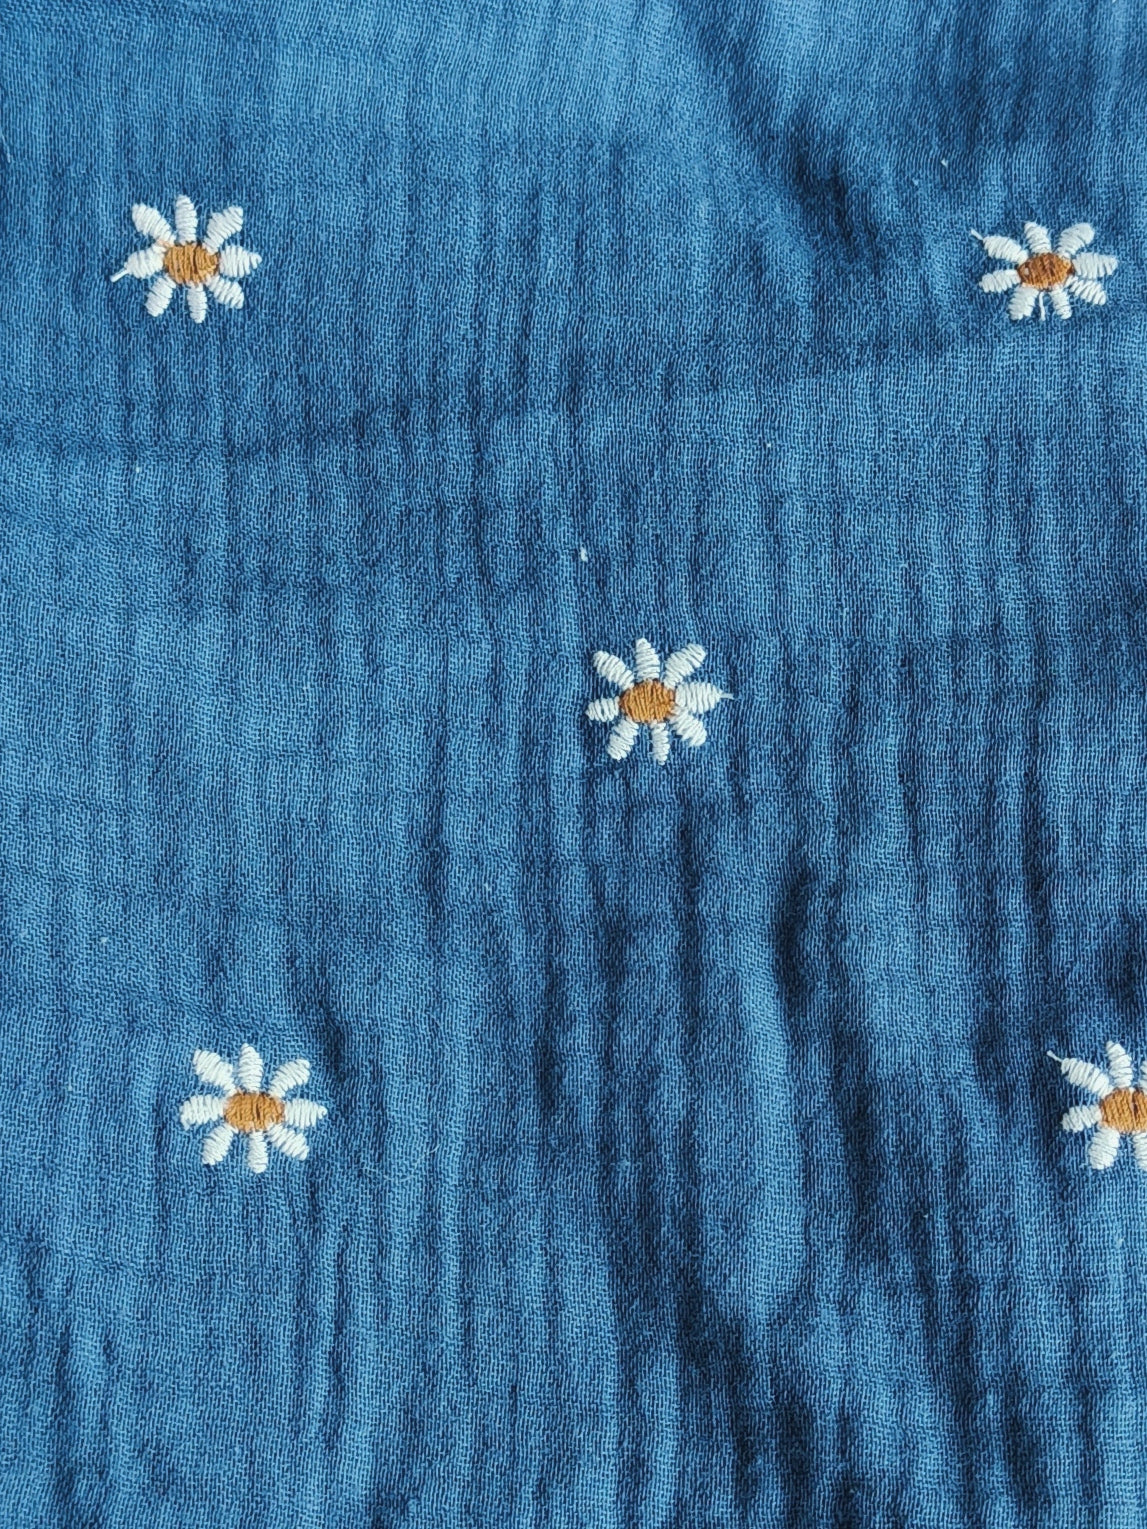 Borstvoedingsdoek Blue daisies hydrofiel